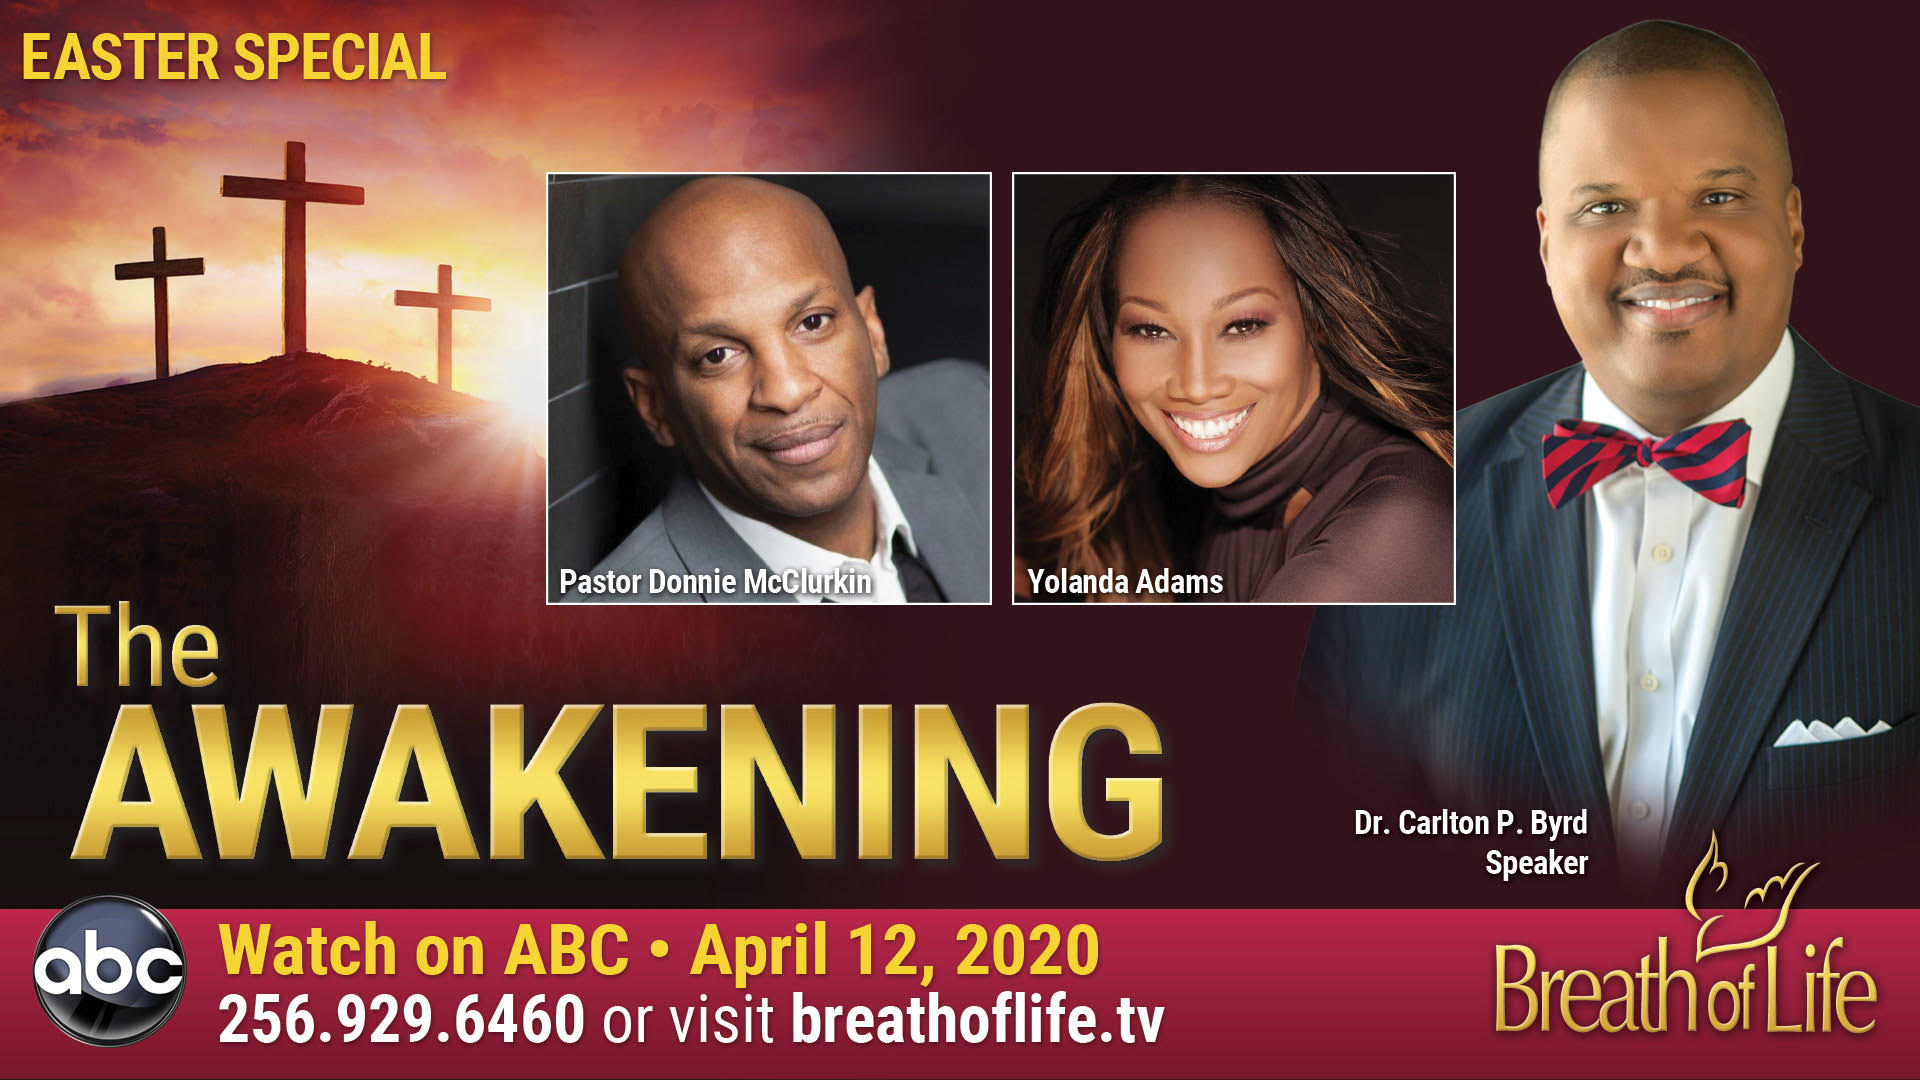 "The Awakening" Breath of Life TV broadcast promotional ad